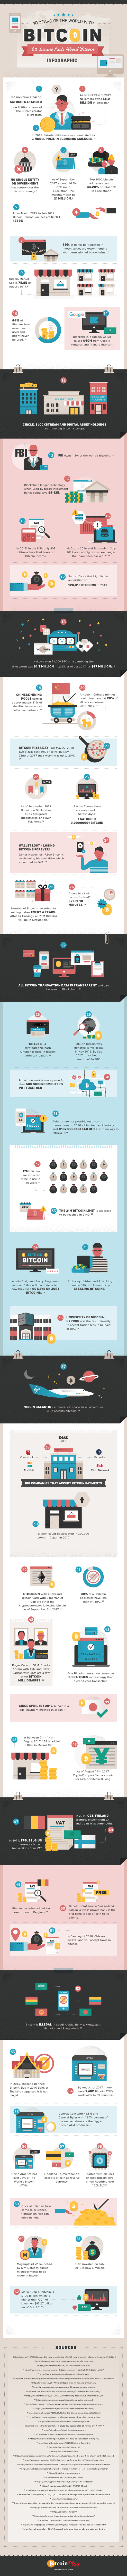 infographic bitcoin